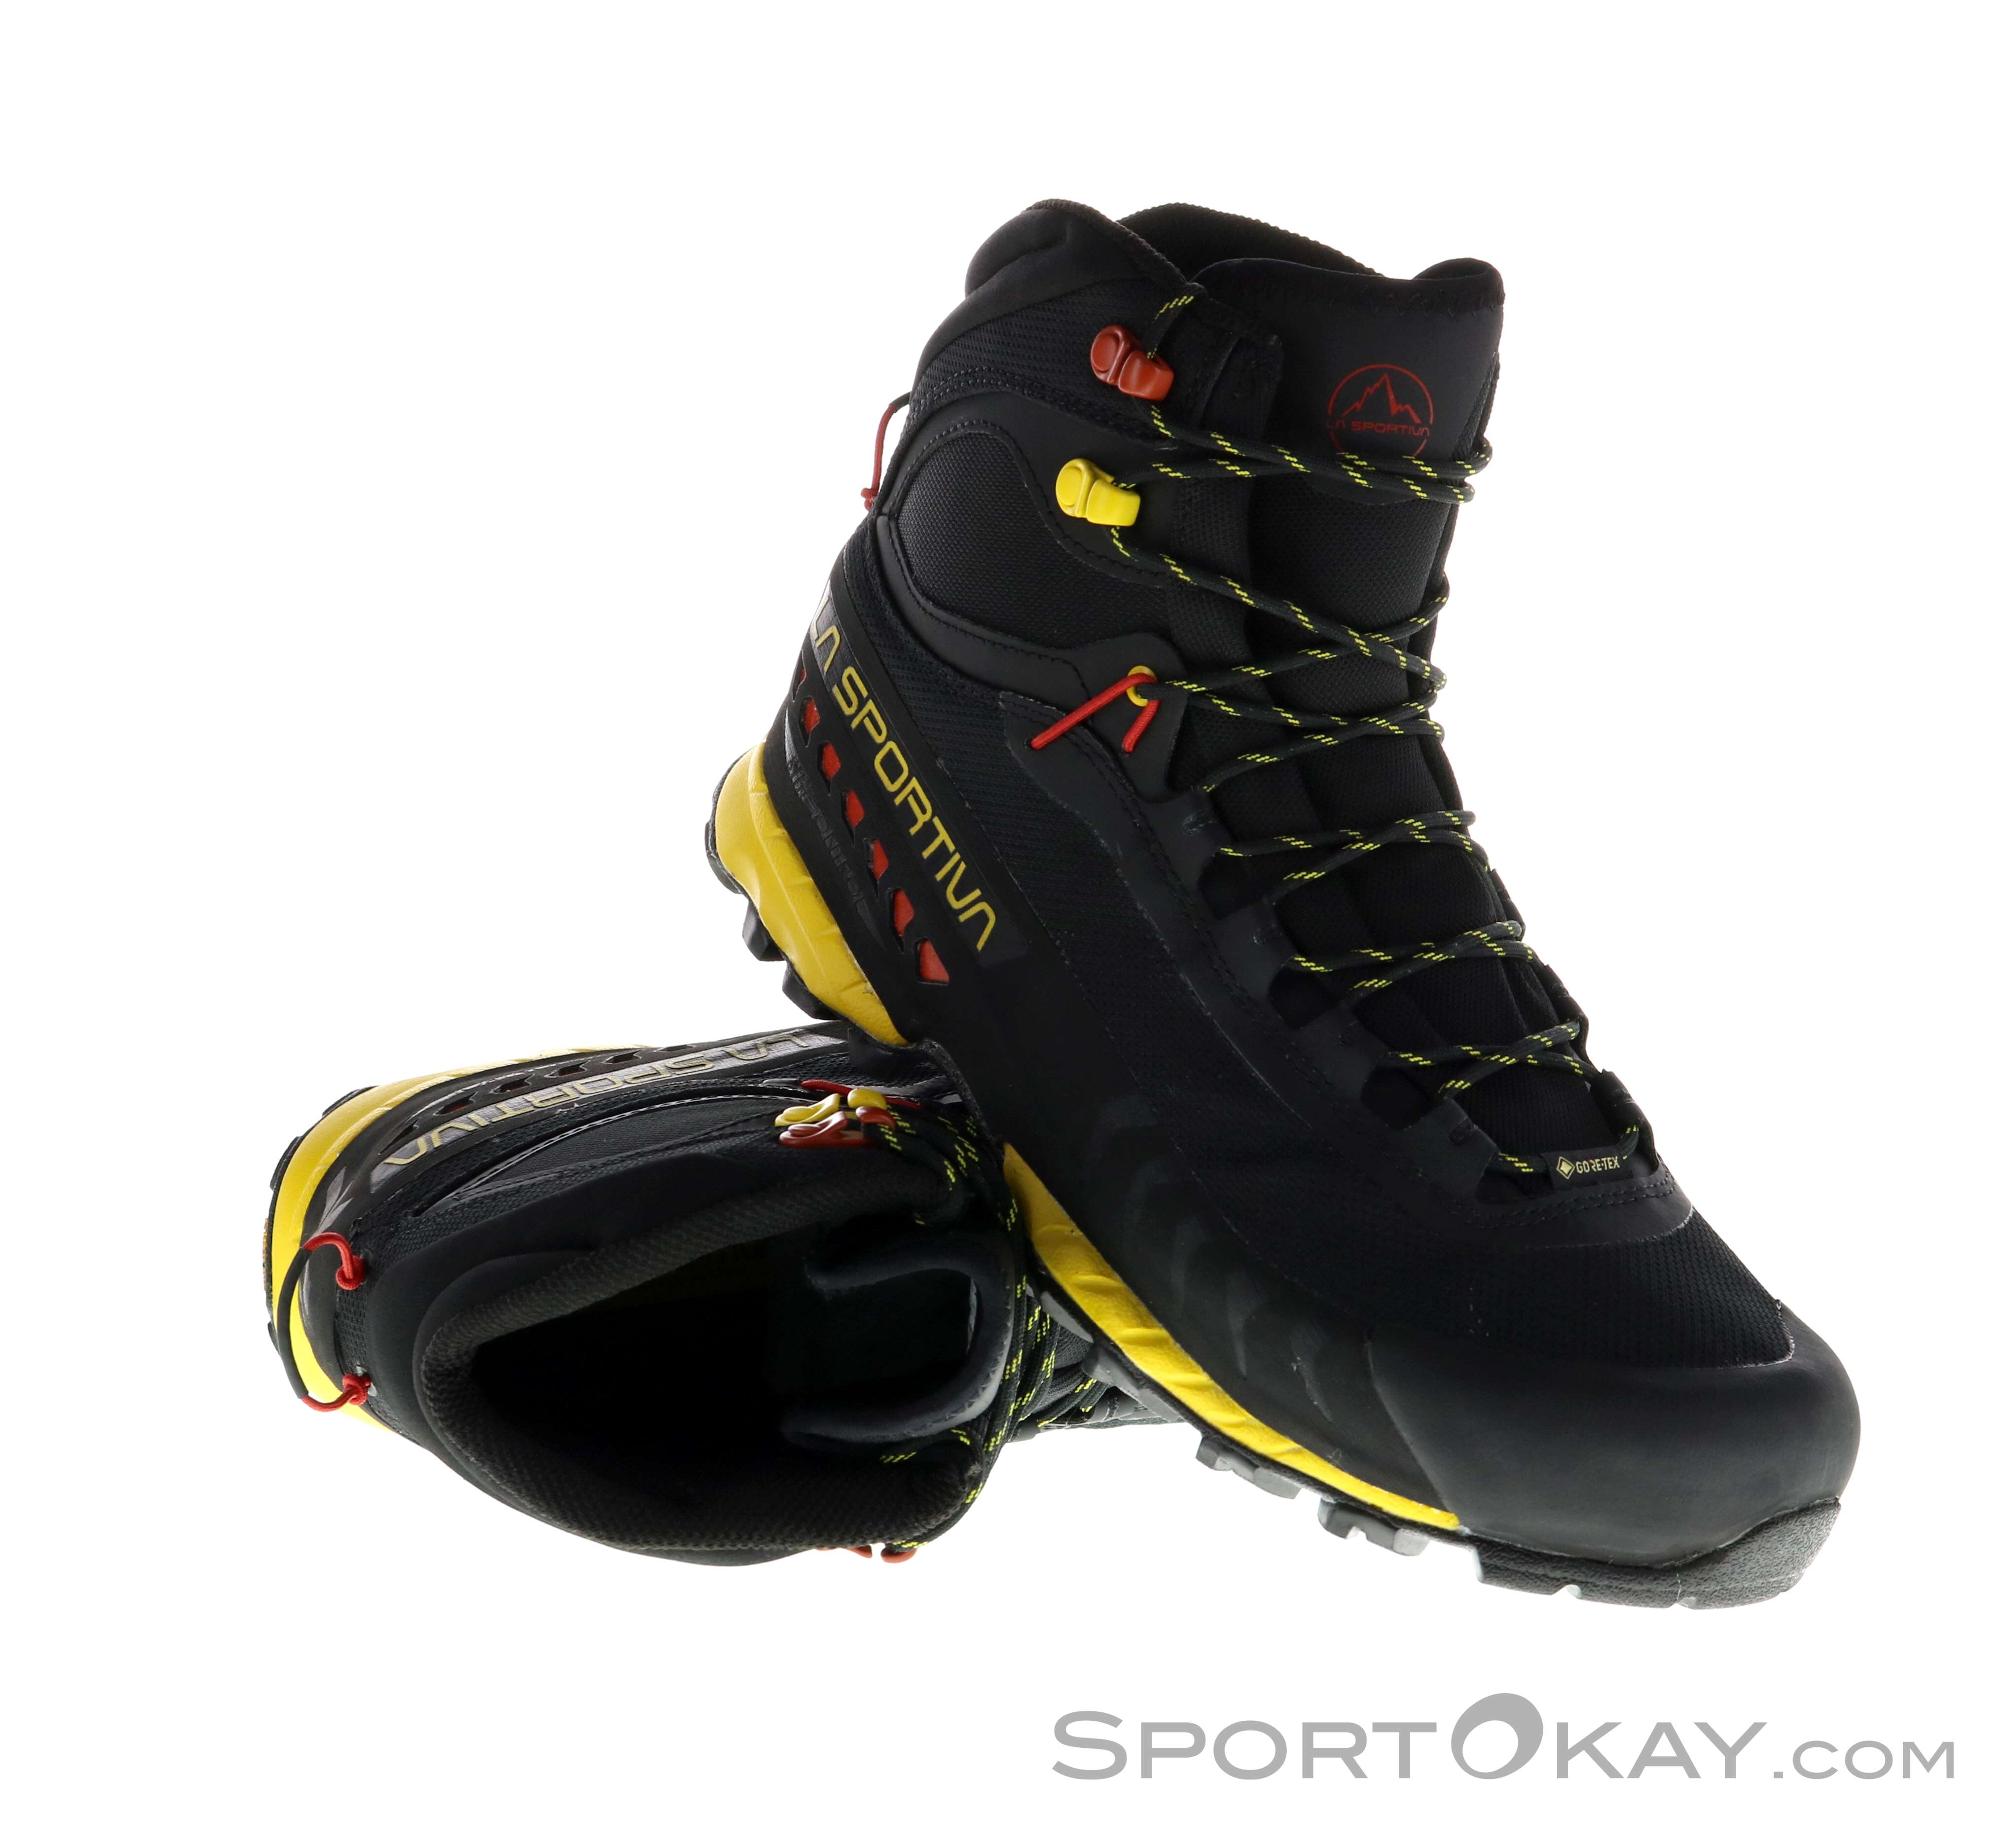 GORE-TEX La Sportiva Mens TxS GORE-TEX Walking Boots Black Sports Outdoors Waterproof 